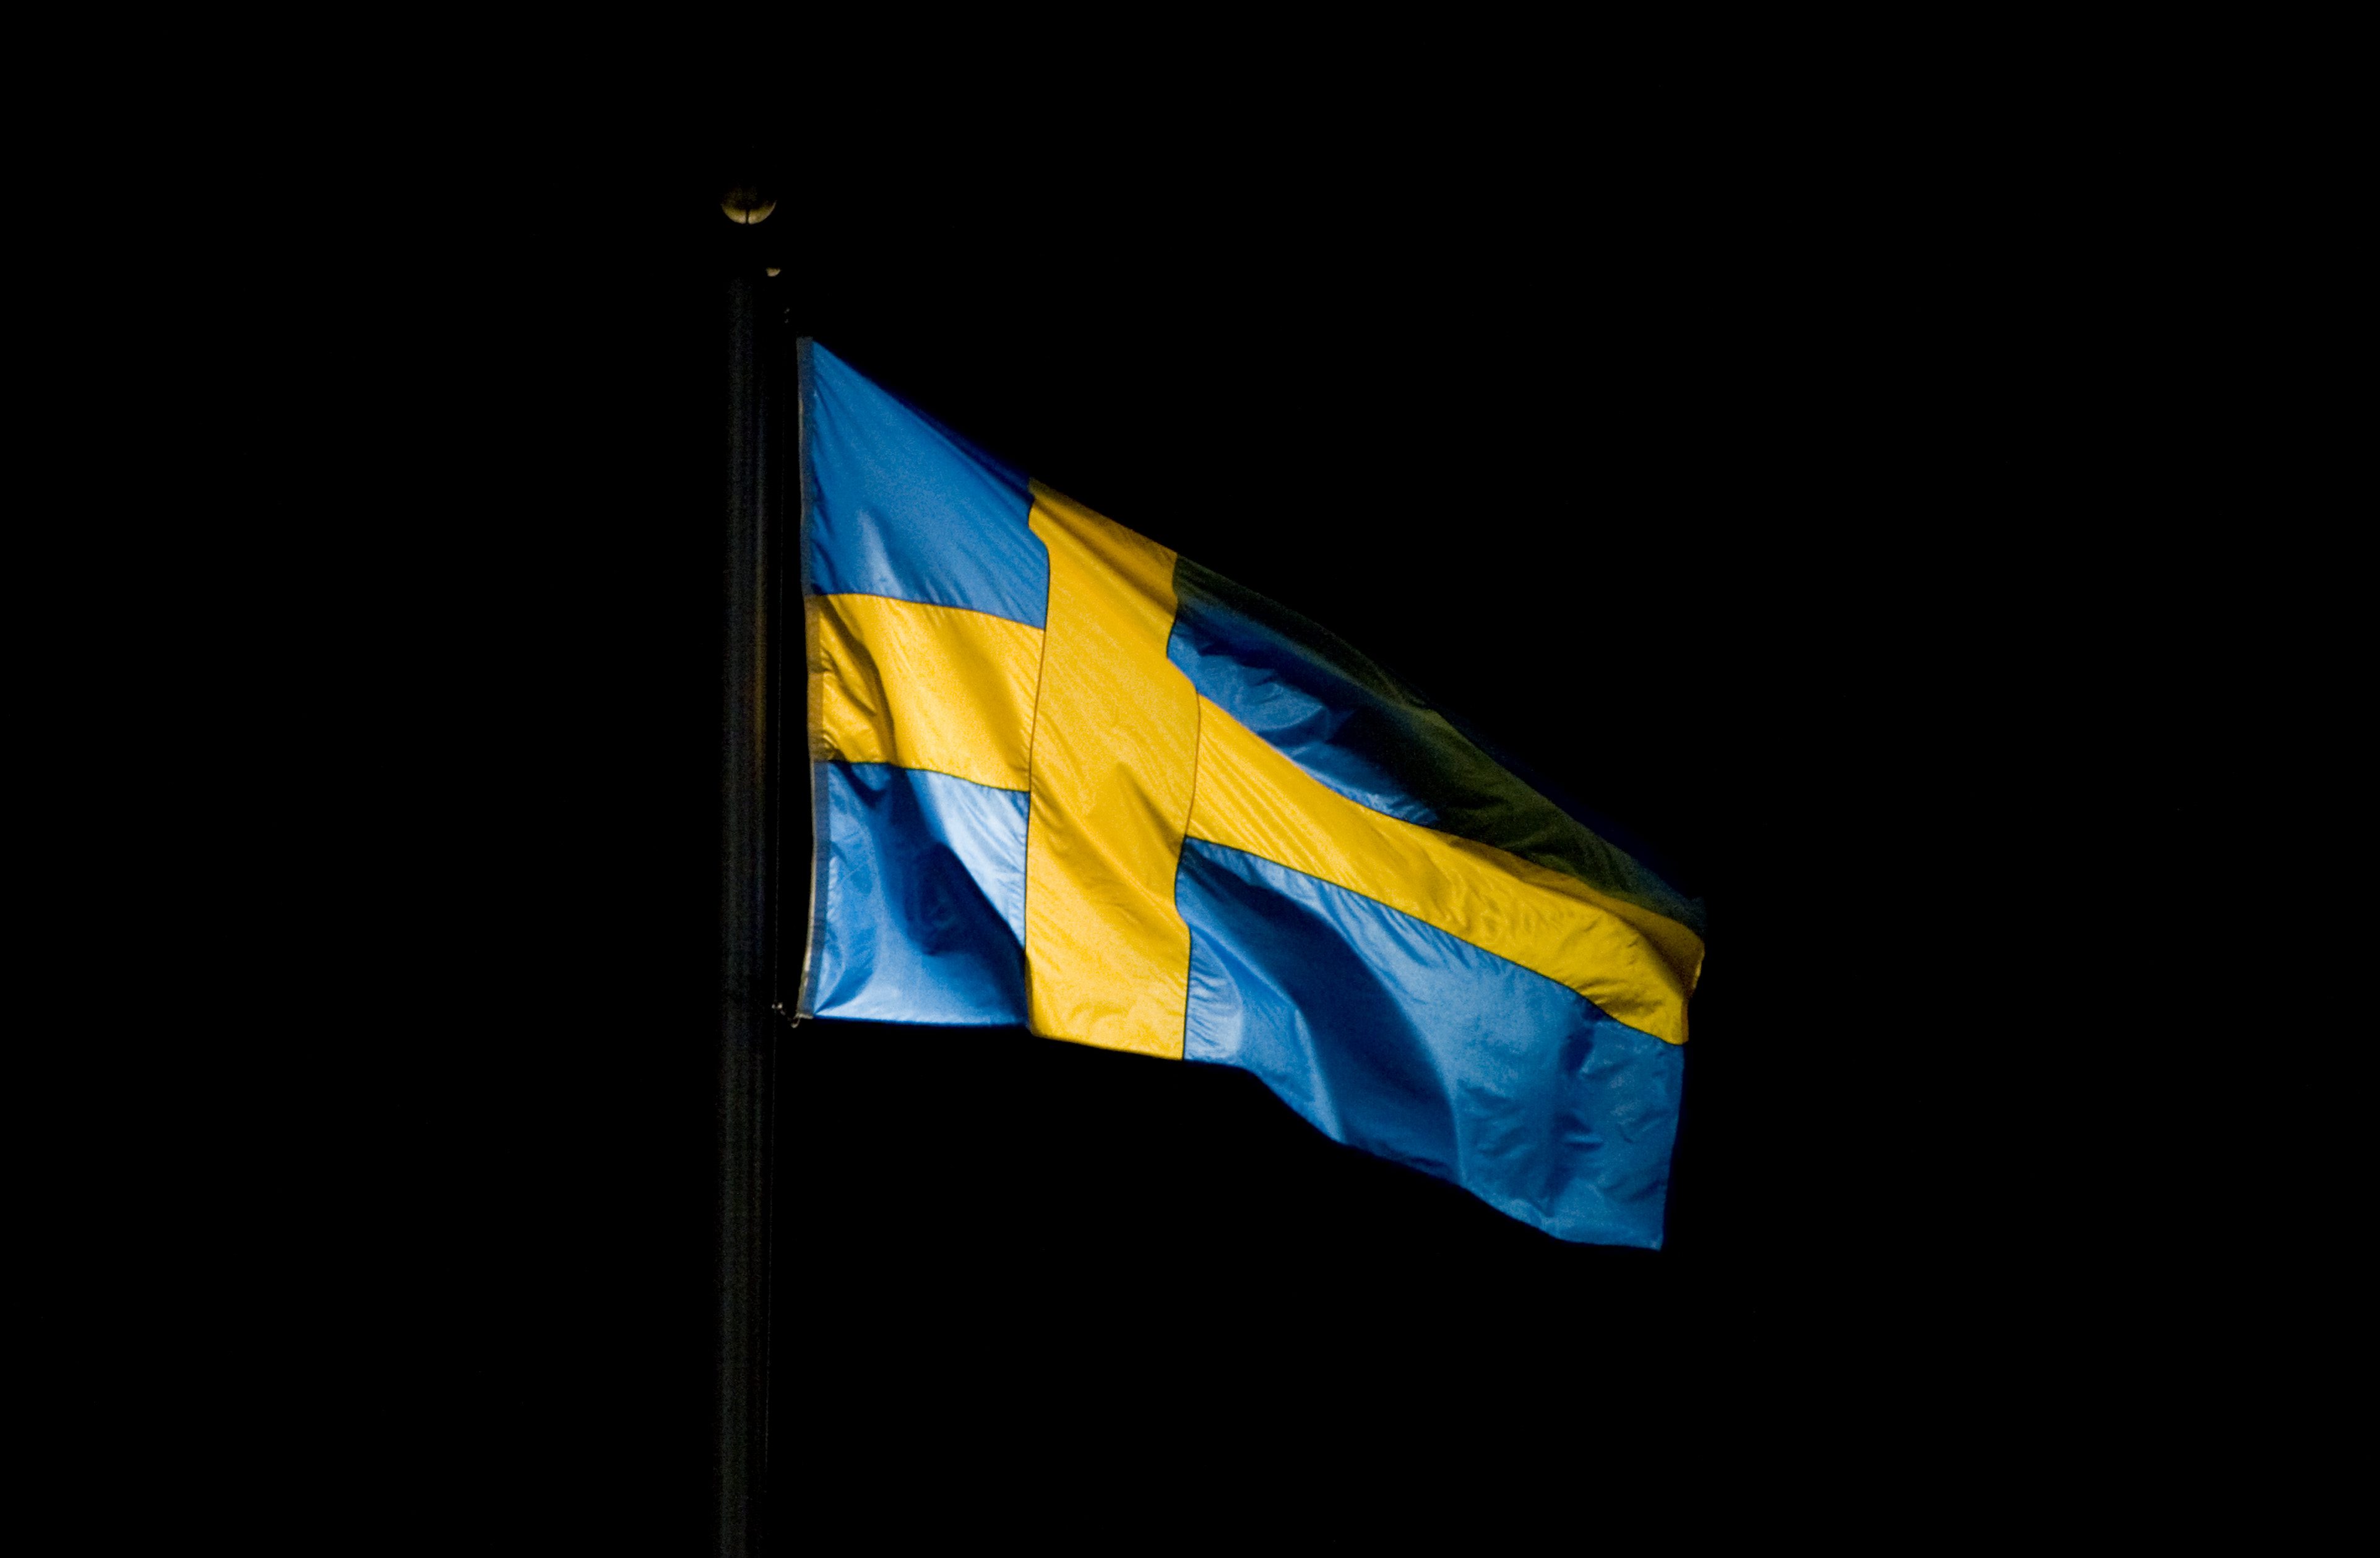 Sveriges nationaldag, Sverige